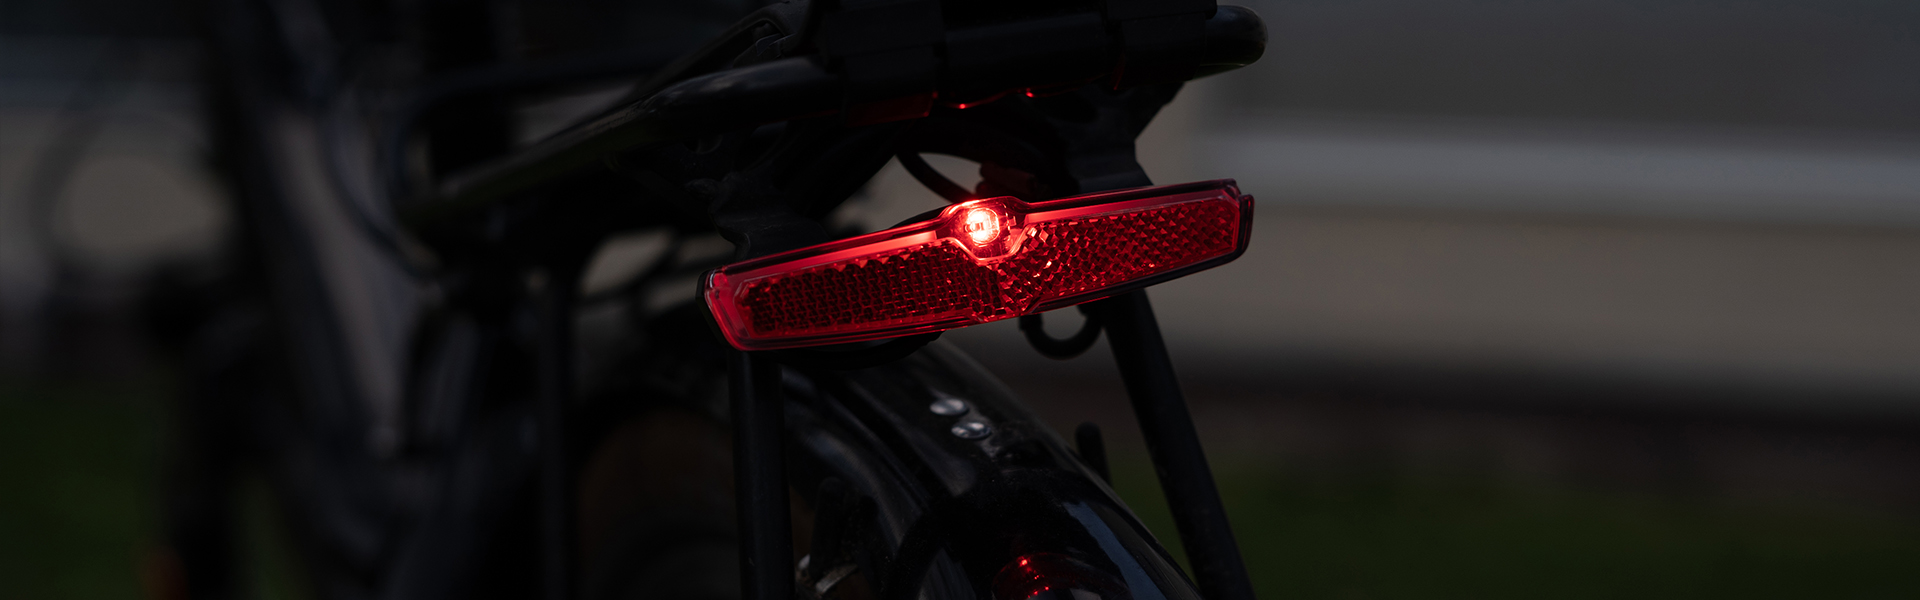 Sate-lite OSRAM 50lux ebike light ISO 6721-1 StVZO CE eletric bike headlight with ECE reflector front fork 6-58V